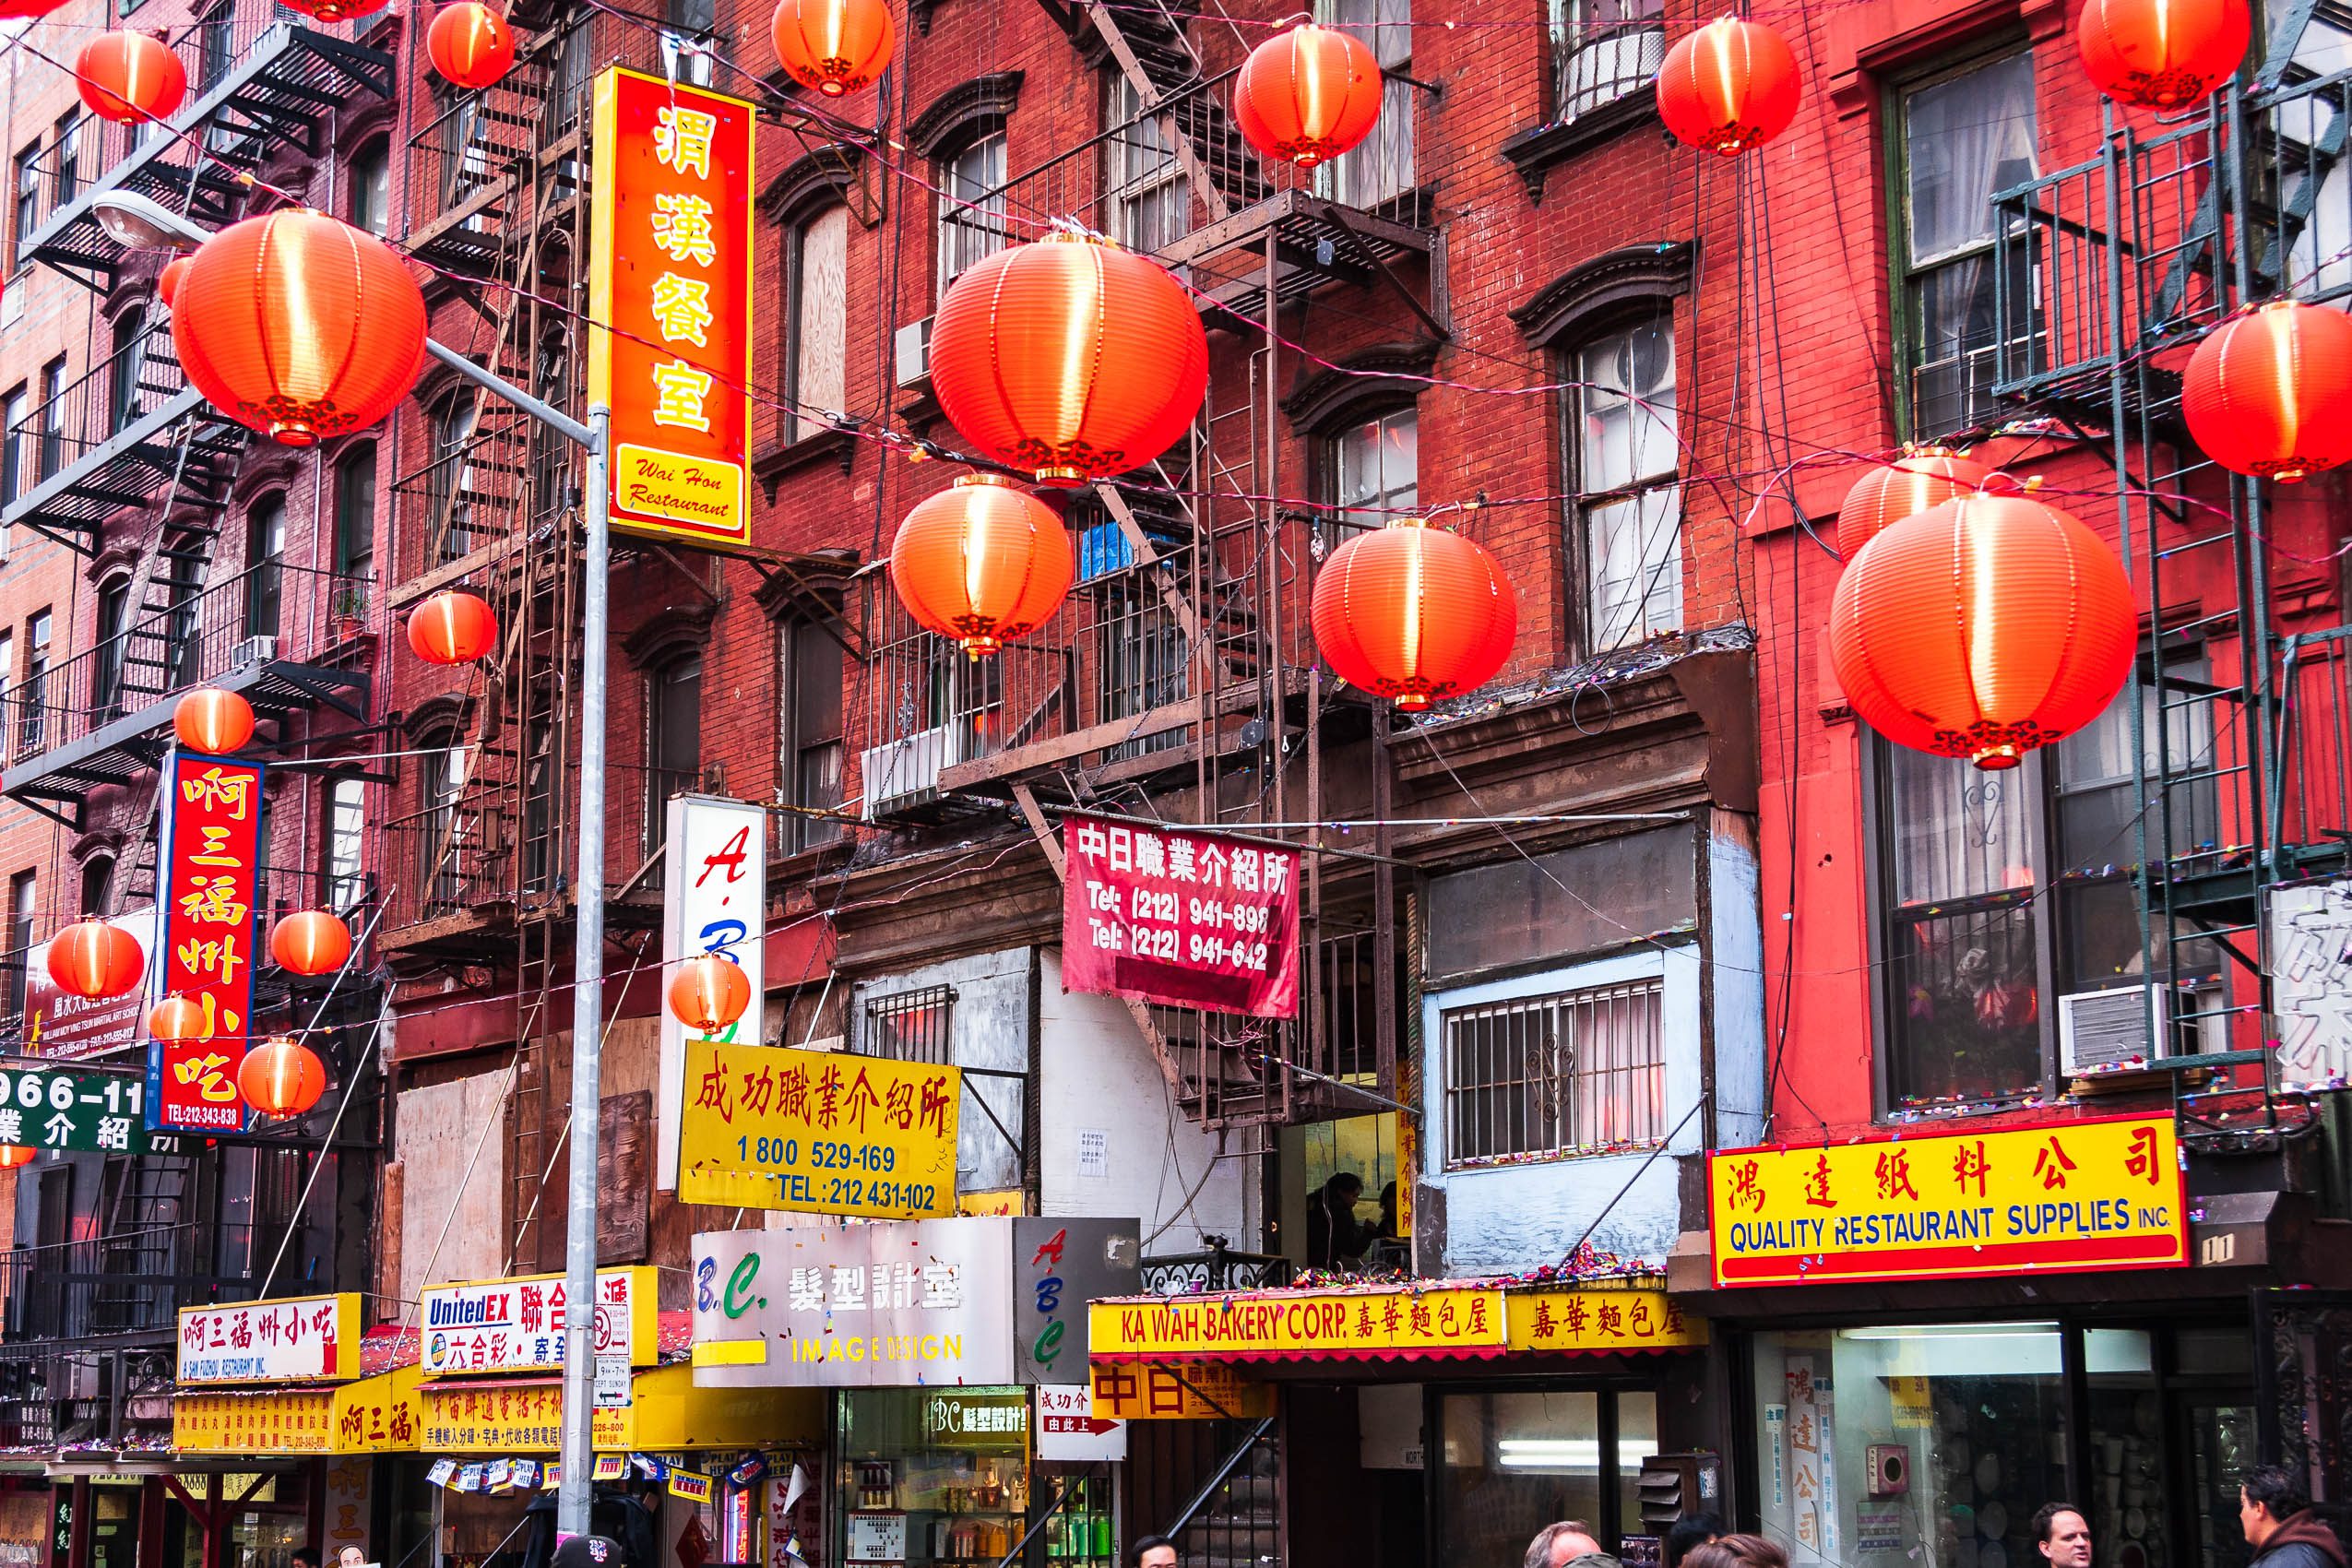 Lanterns in Chinatown, New York City NY036